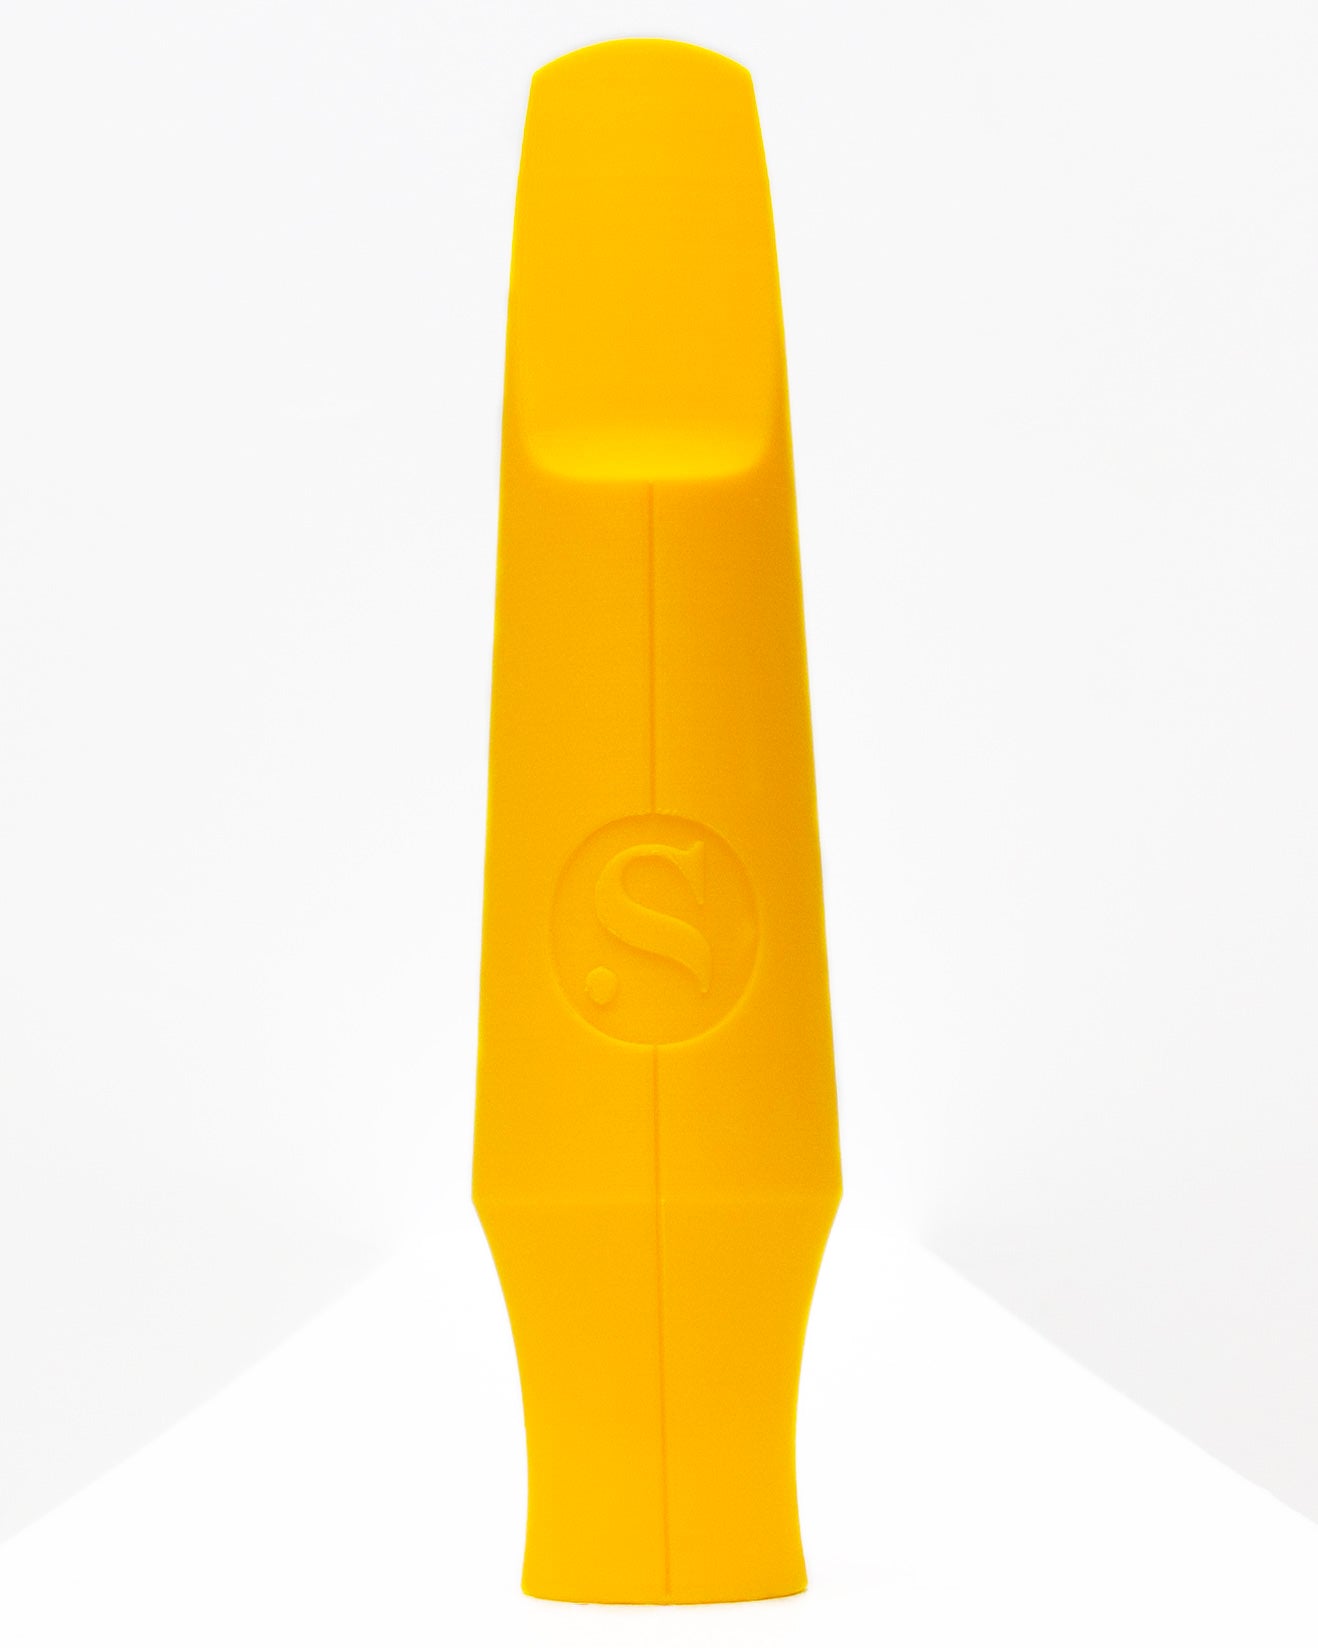 Baritone Signature Saxophone mouthpiece - Knoel Scott by Syos - 9 / Mellow Yellow